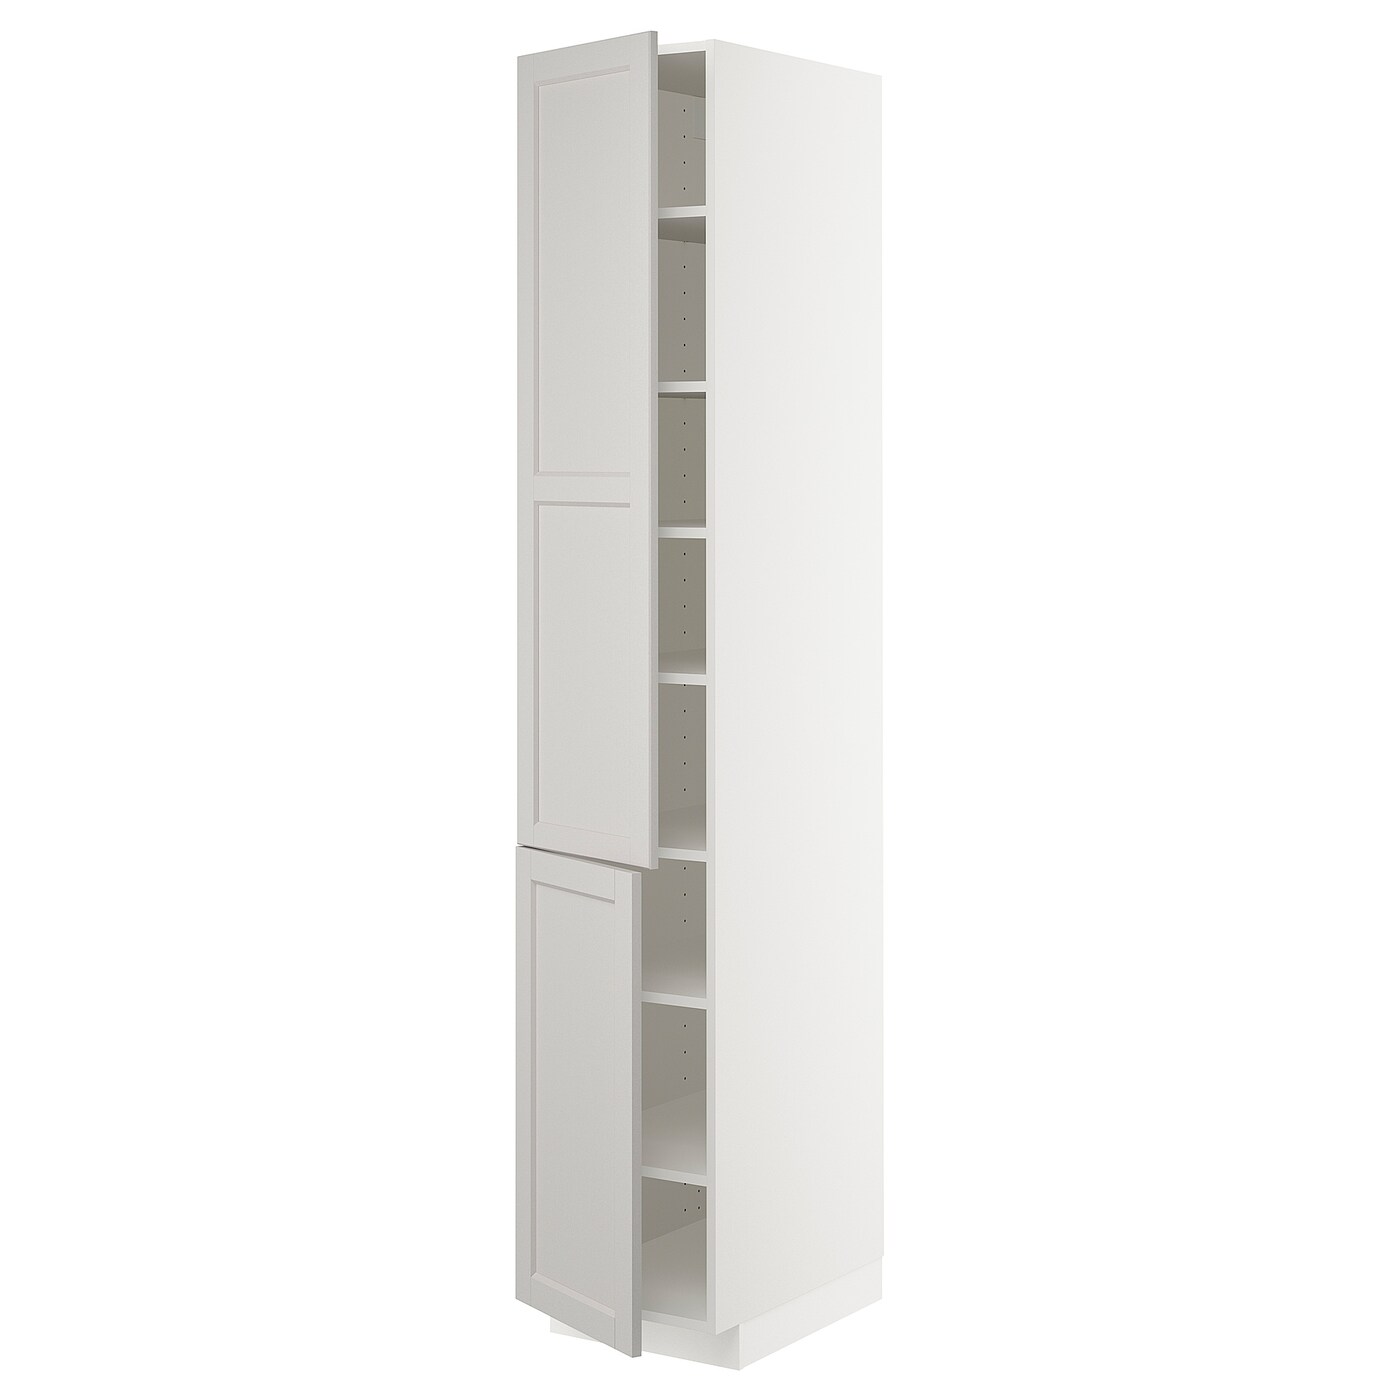 Высокий кухонный шкаф с полками - IKEA METOD/МЕТОД ИКЕА, 220х60х40 см, белый/серый